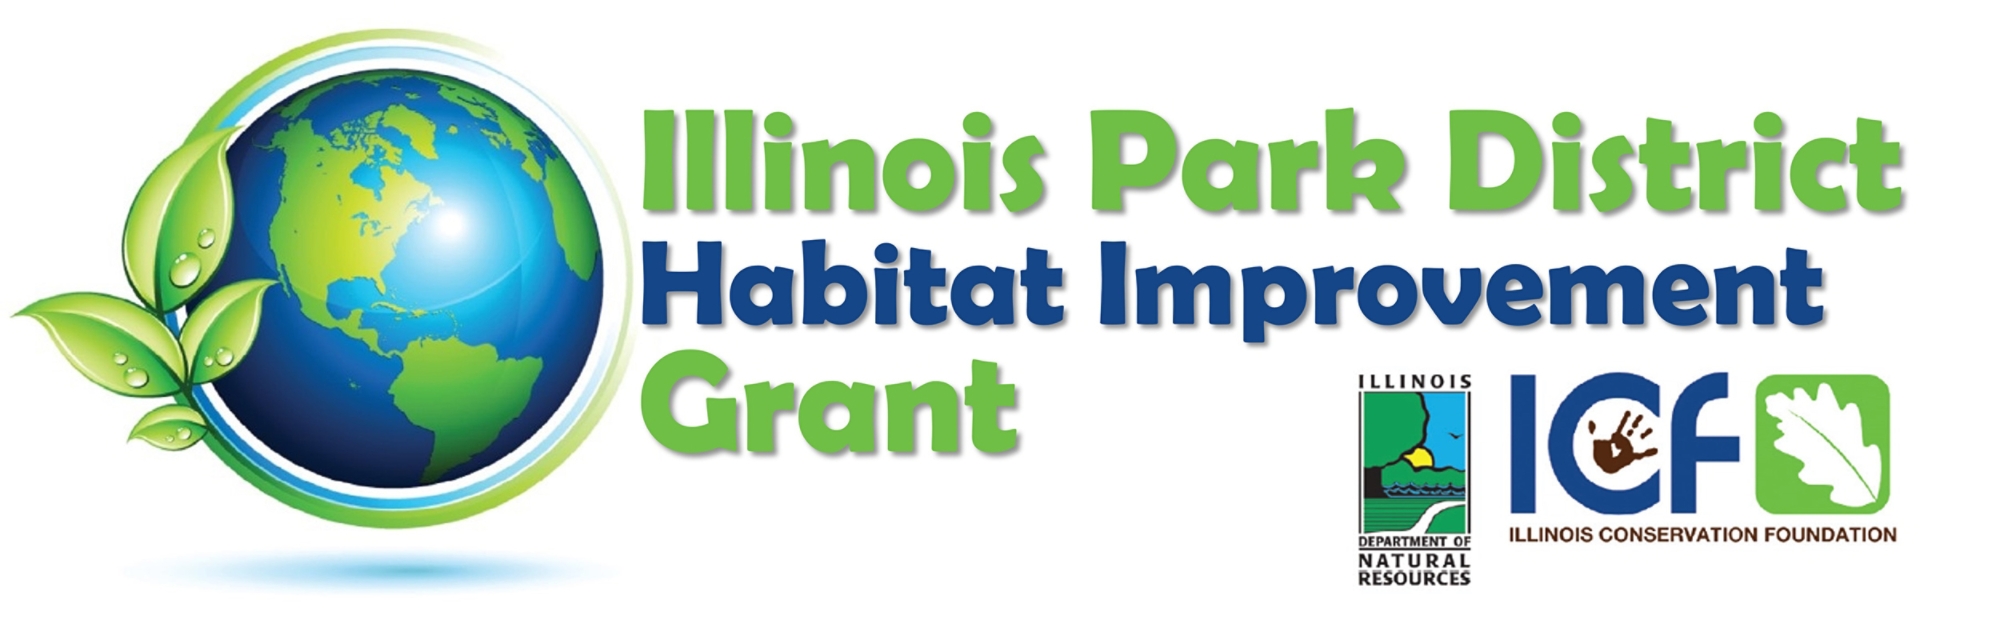 Illinois Park District Habitat Improvement Grant logo